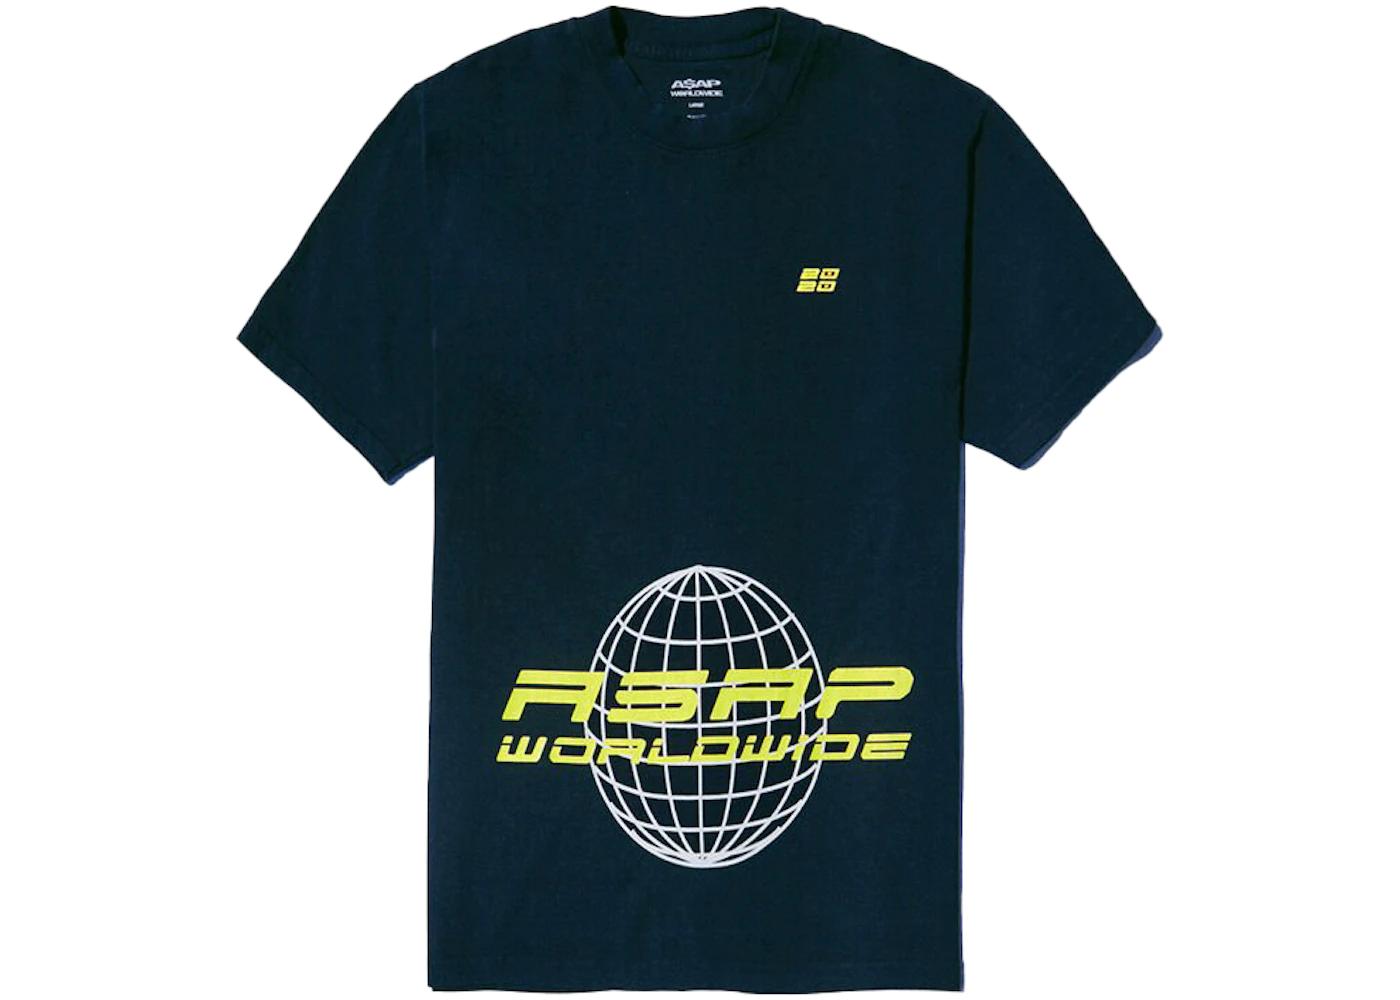 Worldwide Globe 2 T-Shirt Black by A$AP